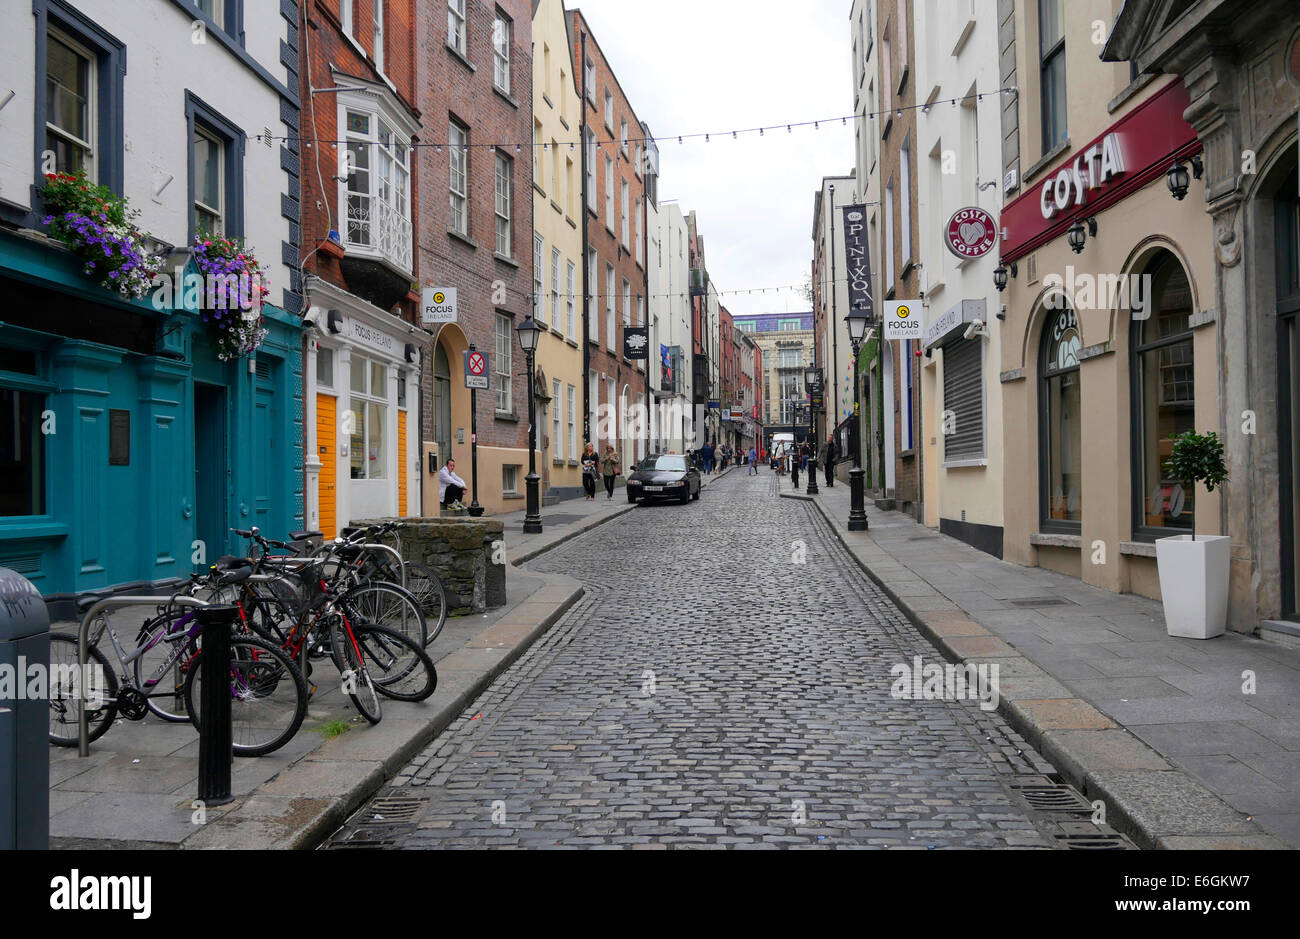 Temple Bar cobbled street Dublin Ireland Stock Photo